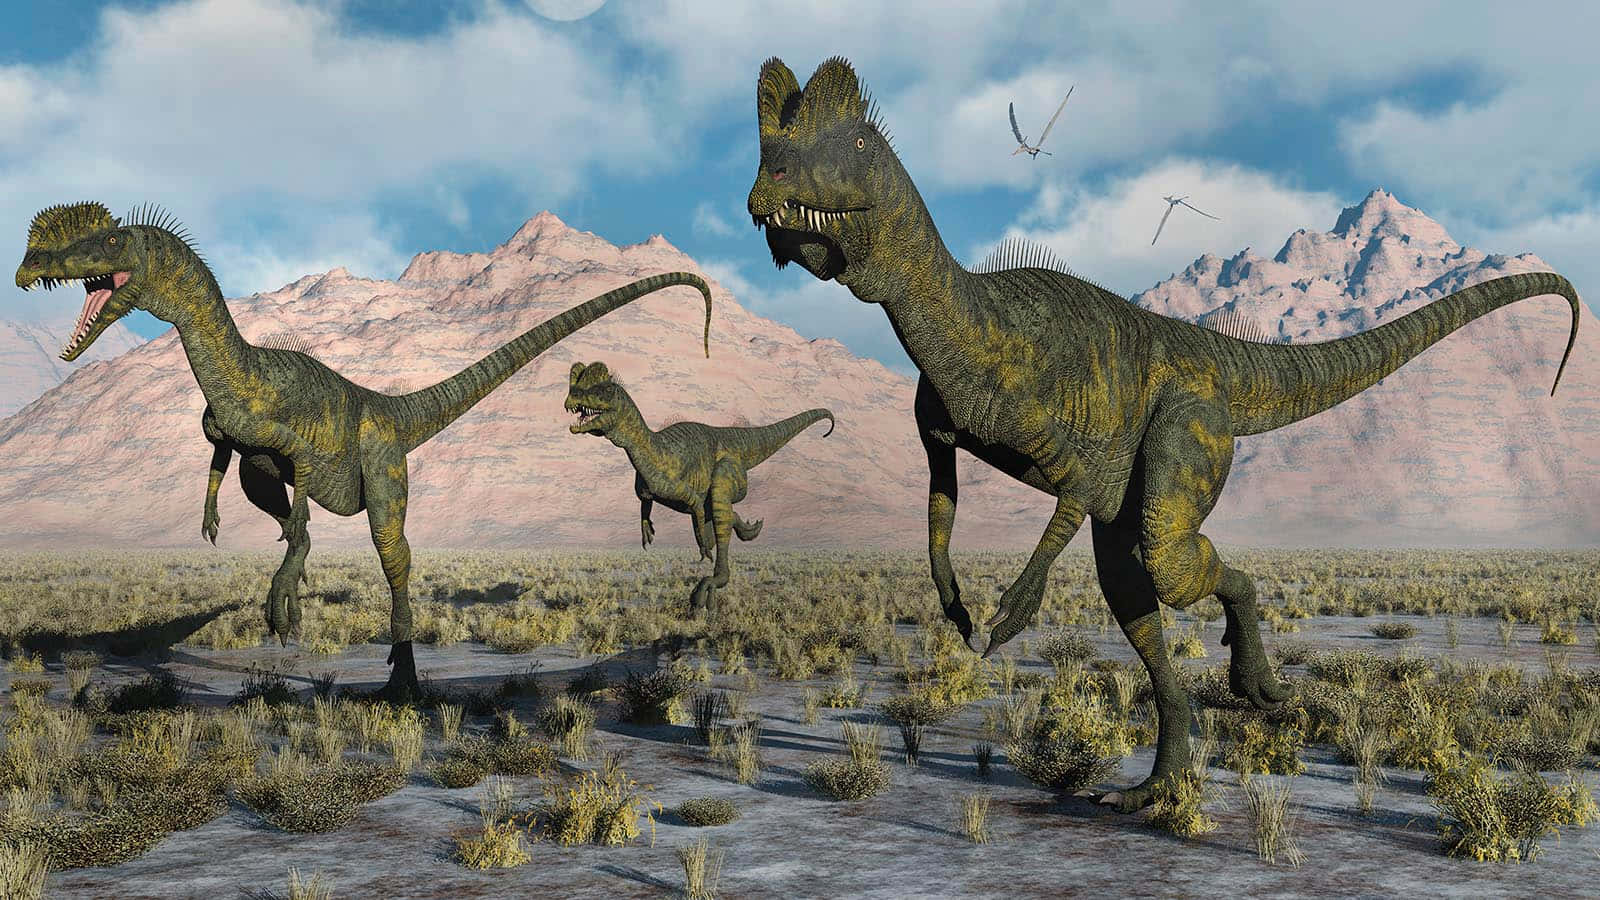 Et gruppe dinosaurer går i ørkenen.